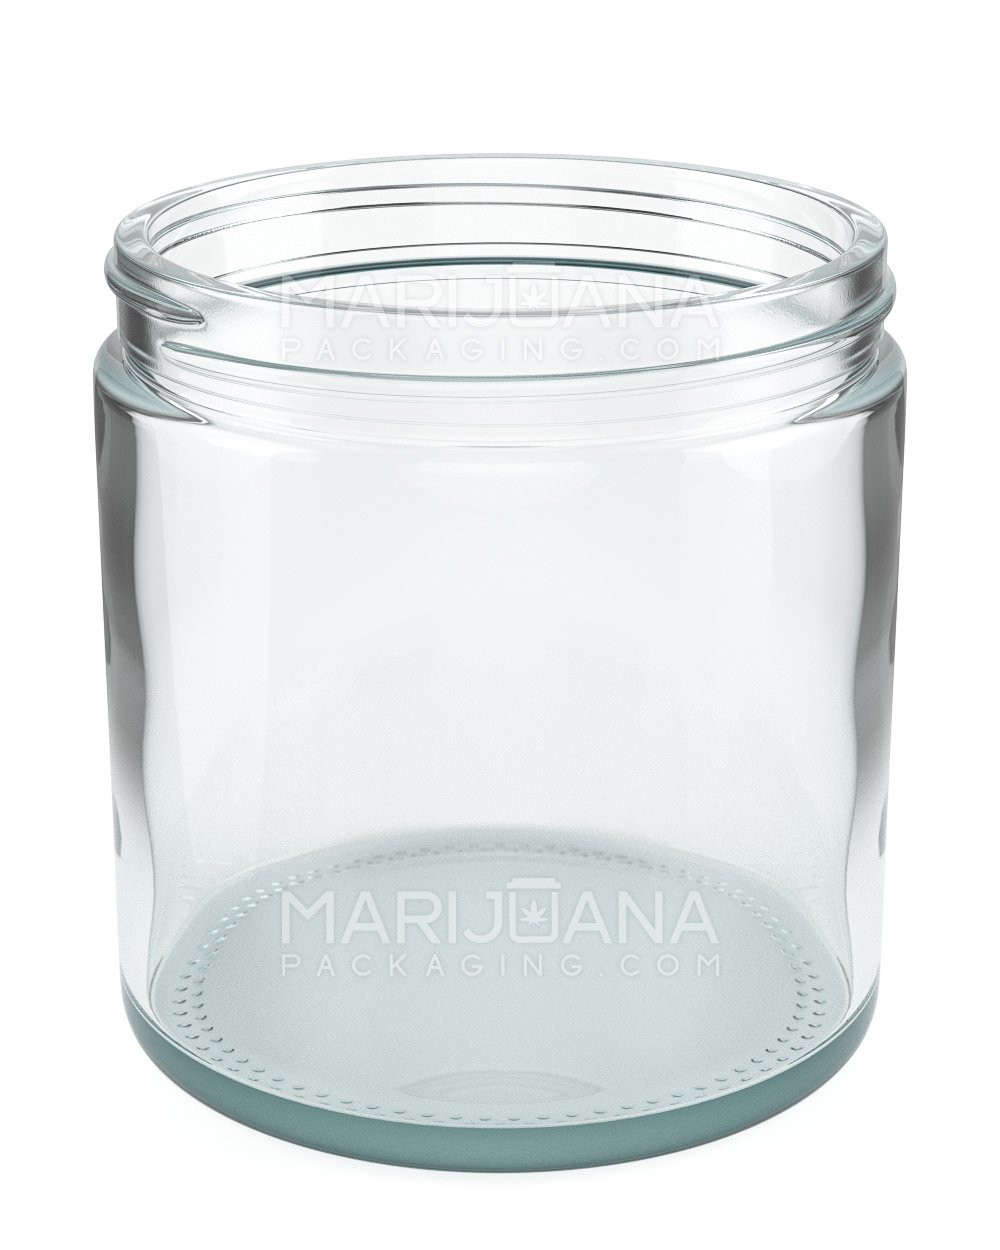 https://cdn.shopify.com/s/files/1/0039/0574/9105/products/straight-sided-glass-jars-89mm-16oz-12-count-dispensary-supply-marijuana-packaging-810289.jpg?v=1593785483&width=1000